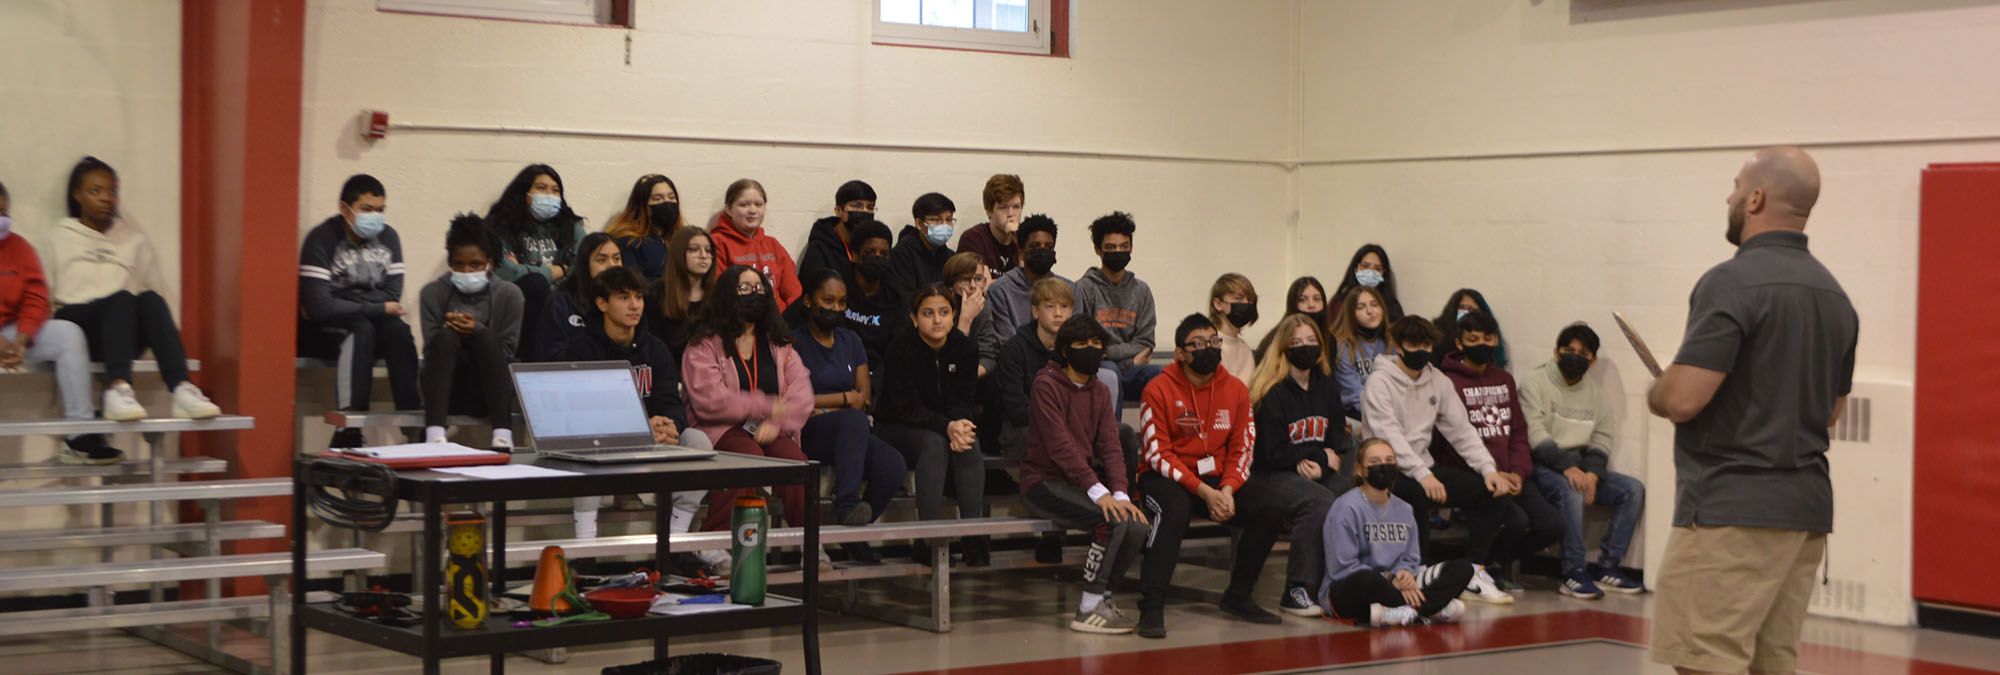 Students sit in bleachers and listen to teacher in gymnasium